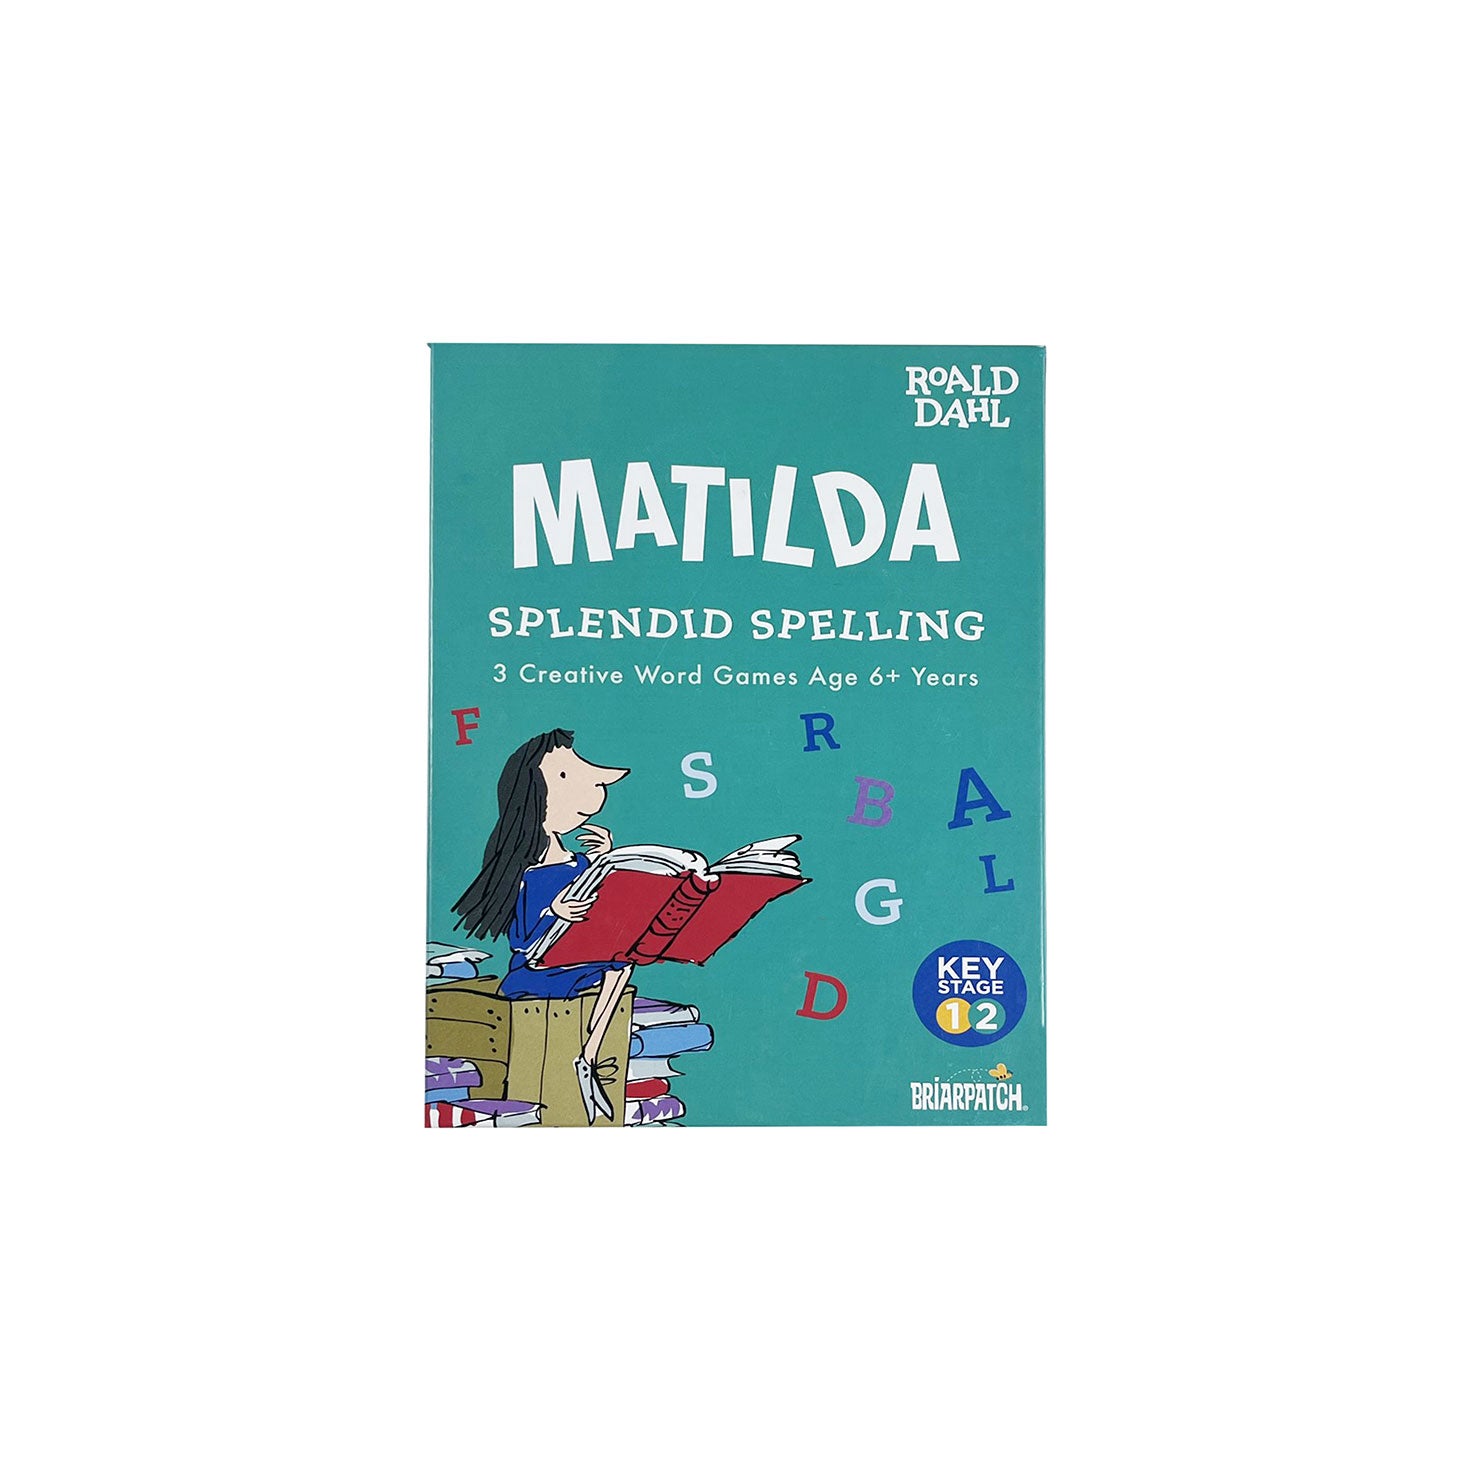 Matilda Splendid Spelling game, based on Roald Dahl's Matilda with illustrations by Quentin Blake